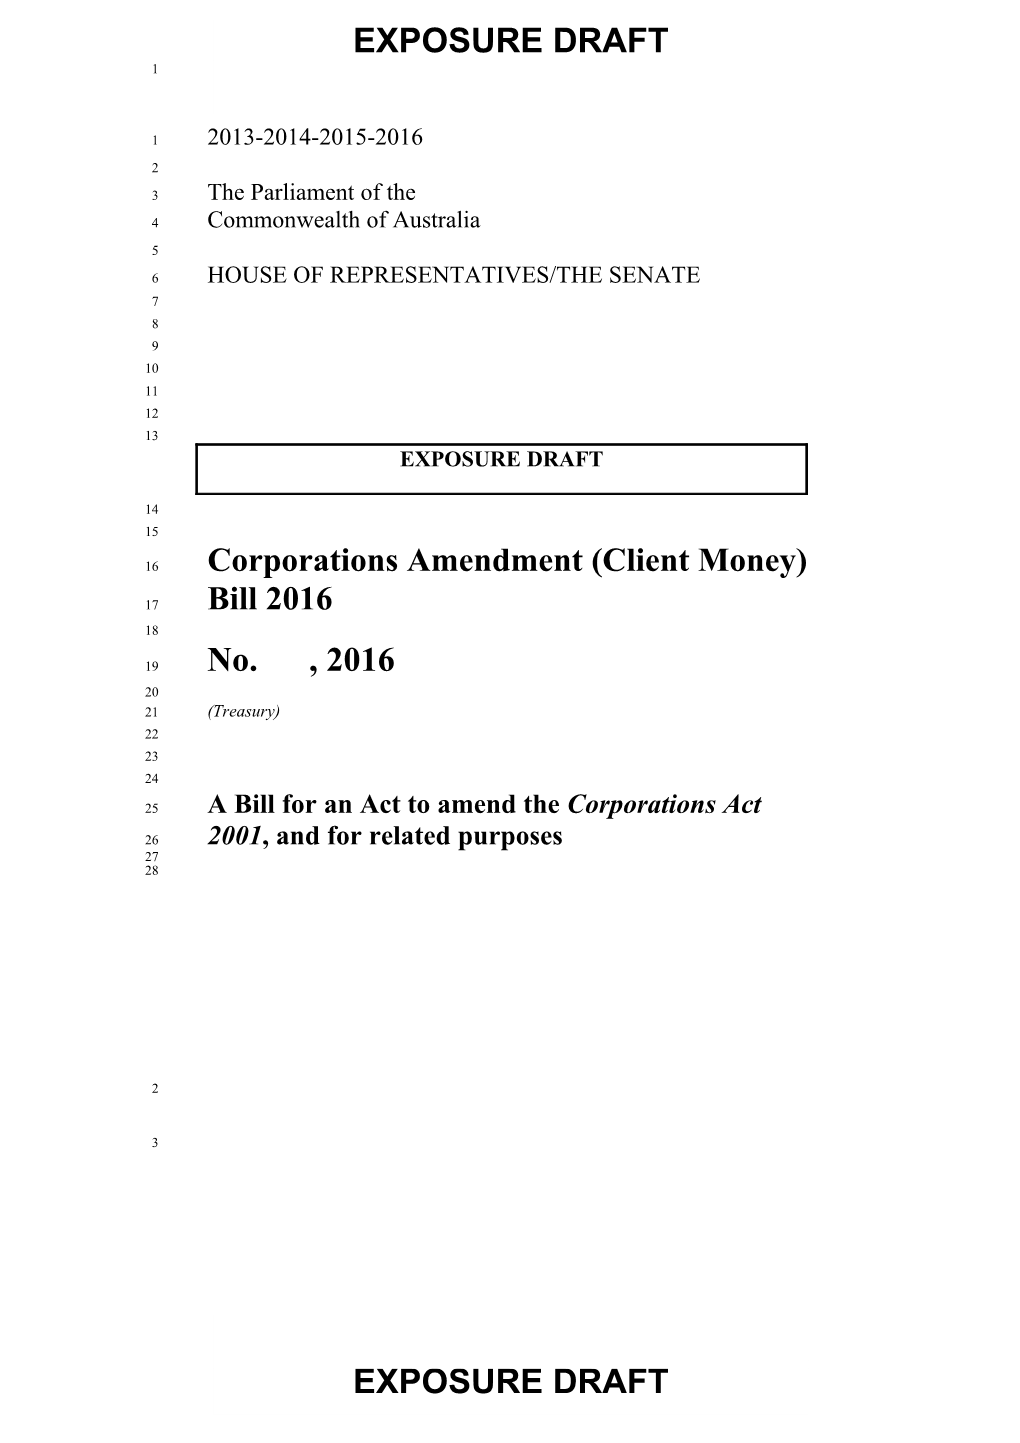 Exposure Draft - Corporations Amendment (Client Money) Bill 2016